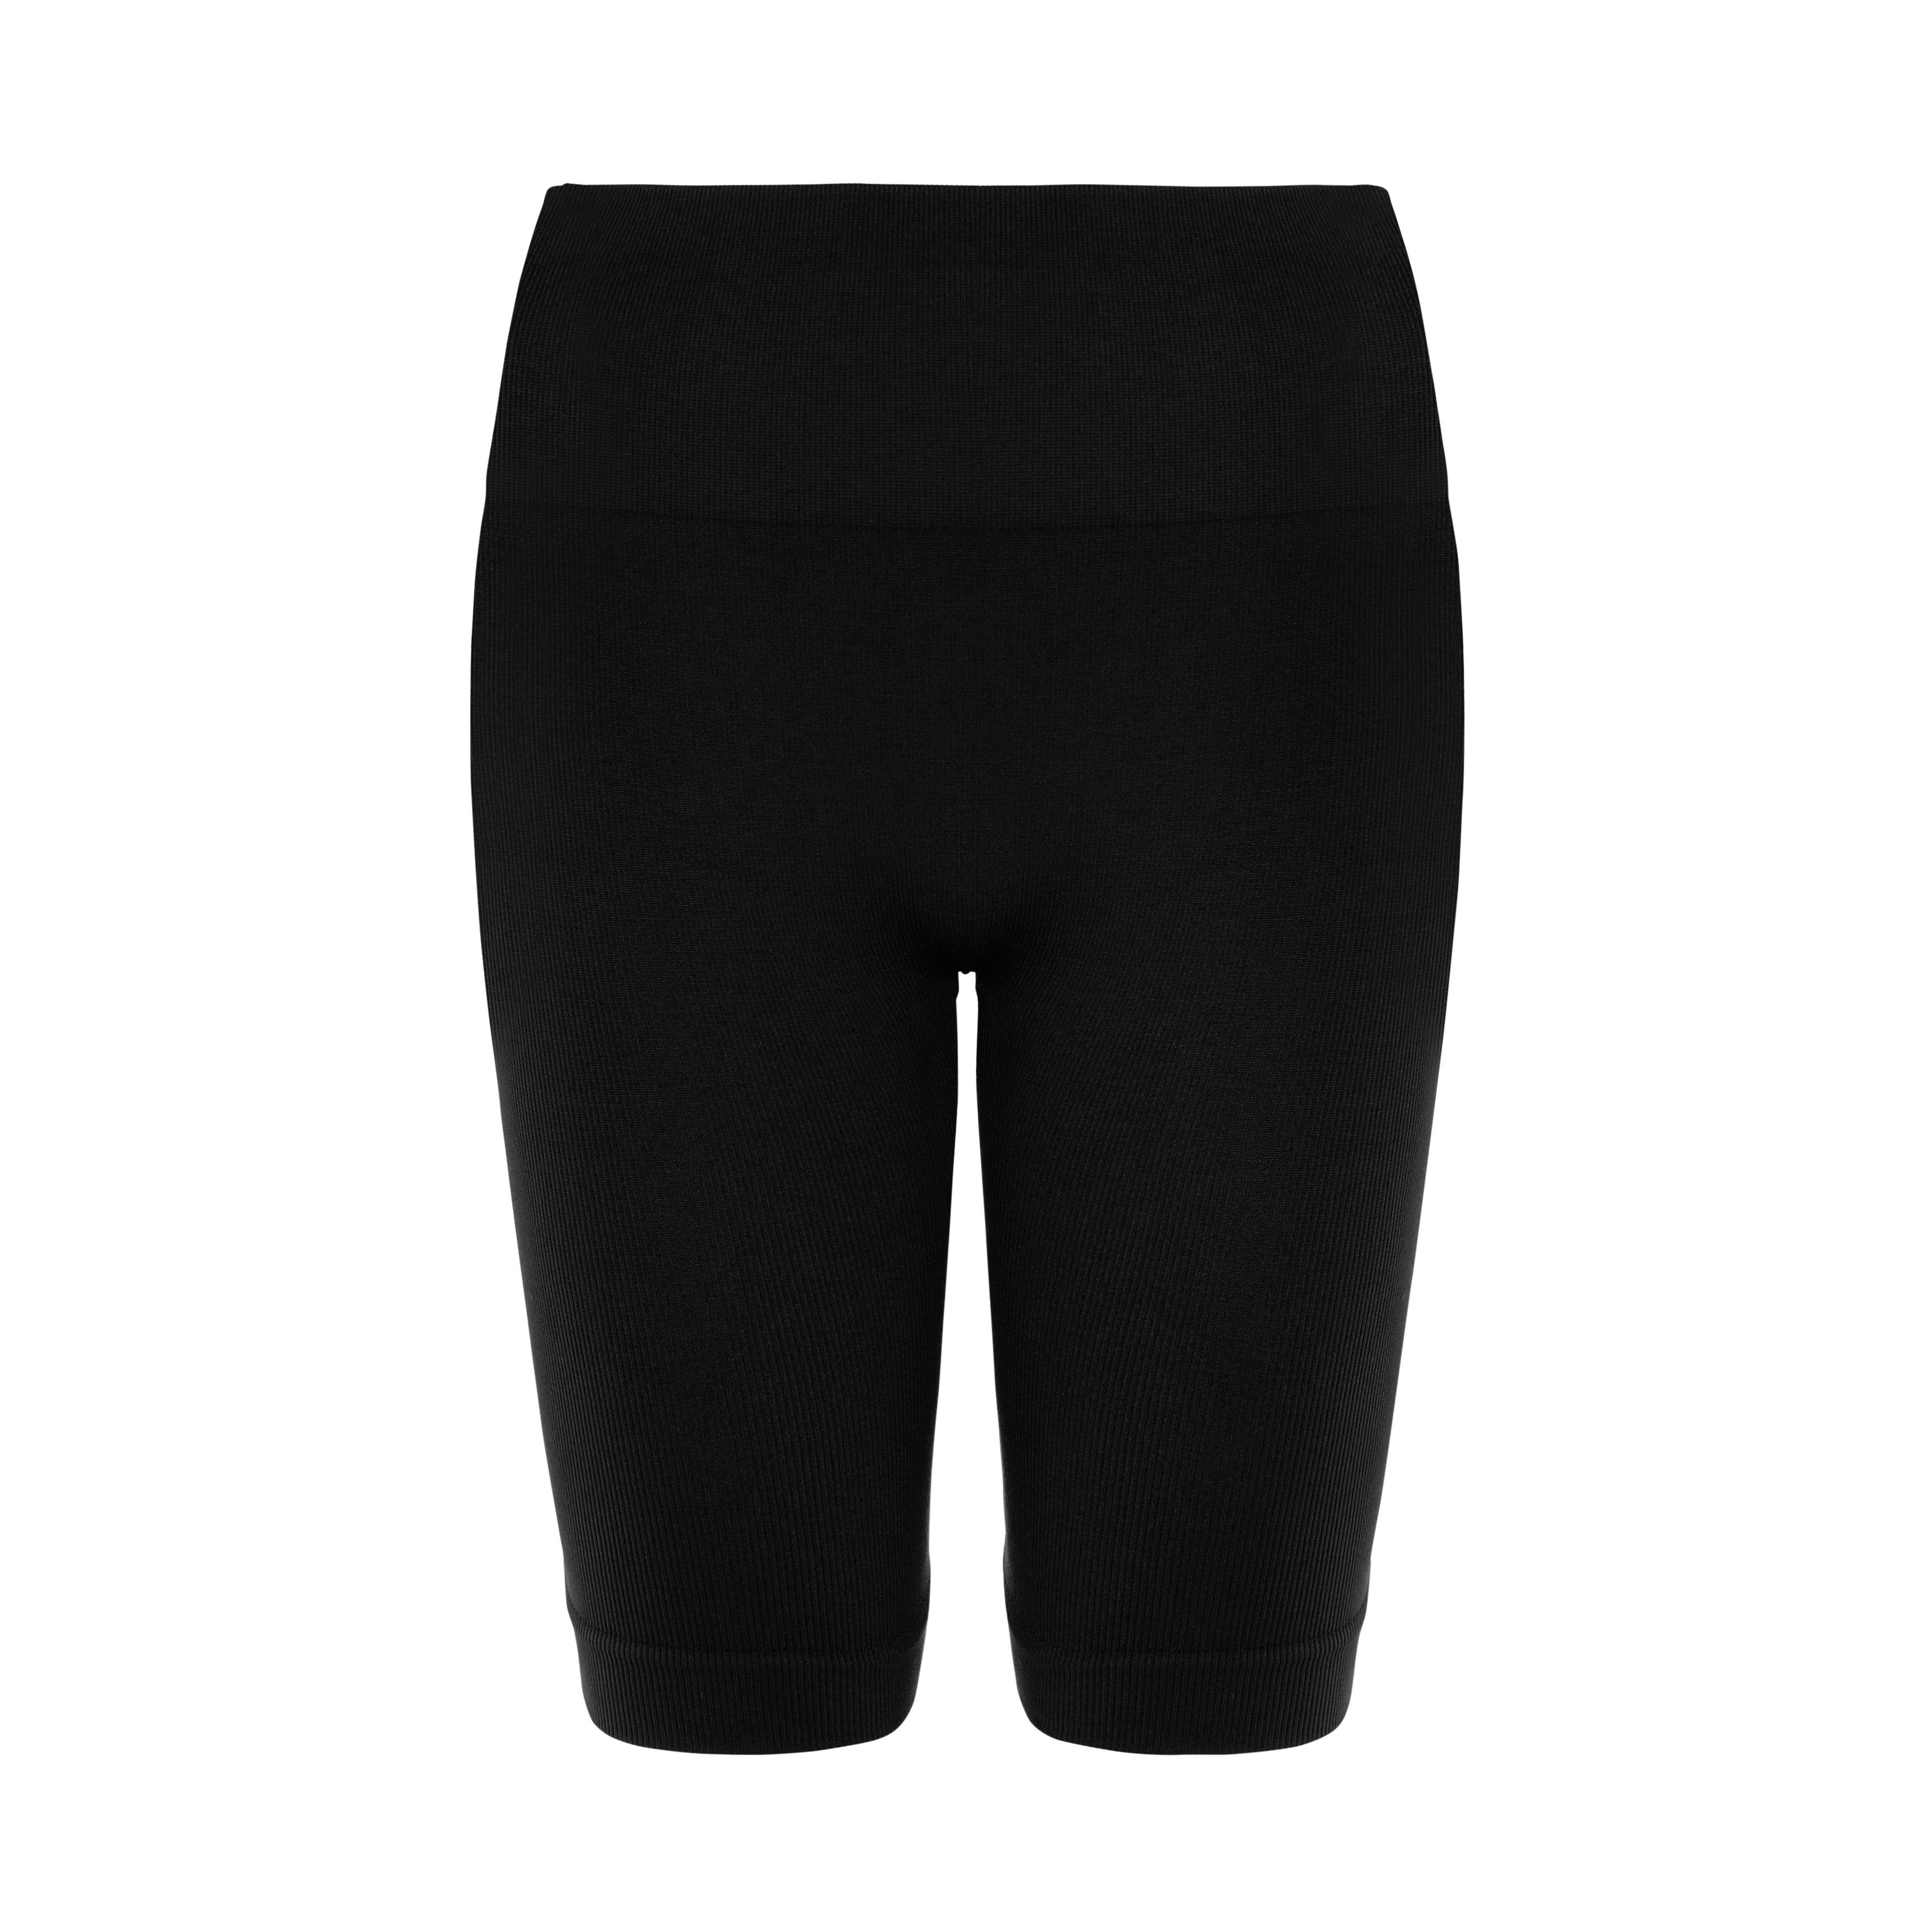 Black Seamfree Biker Shorts | Women's Tops | Women's Style | Our ...